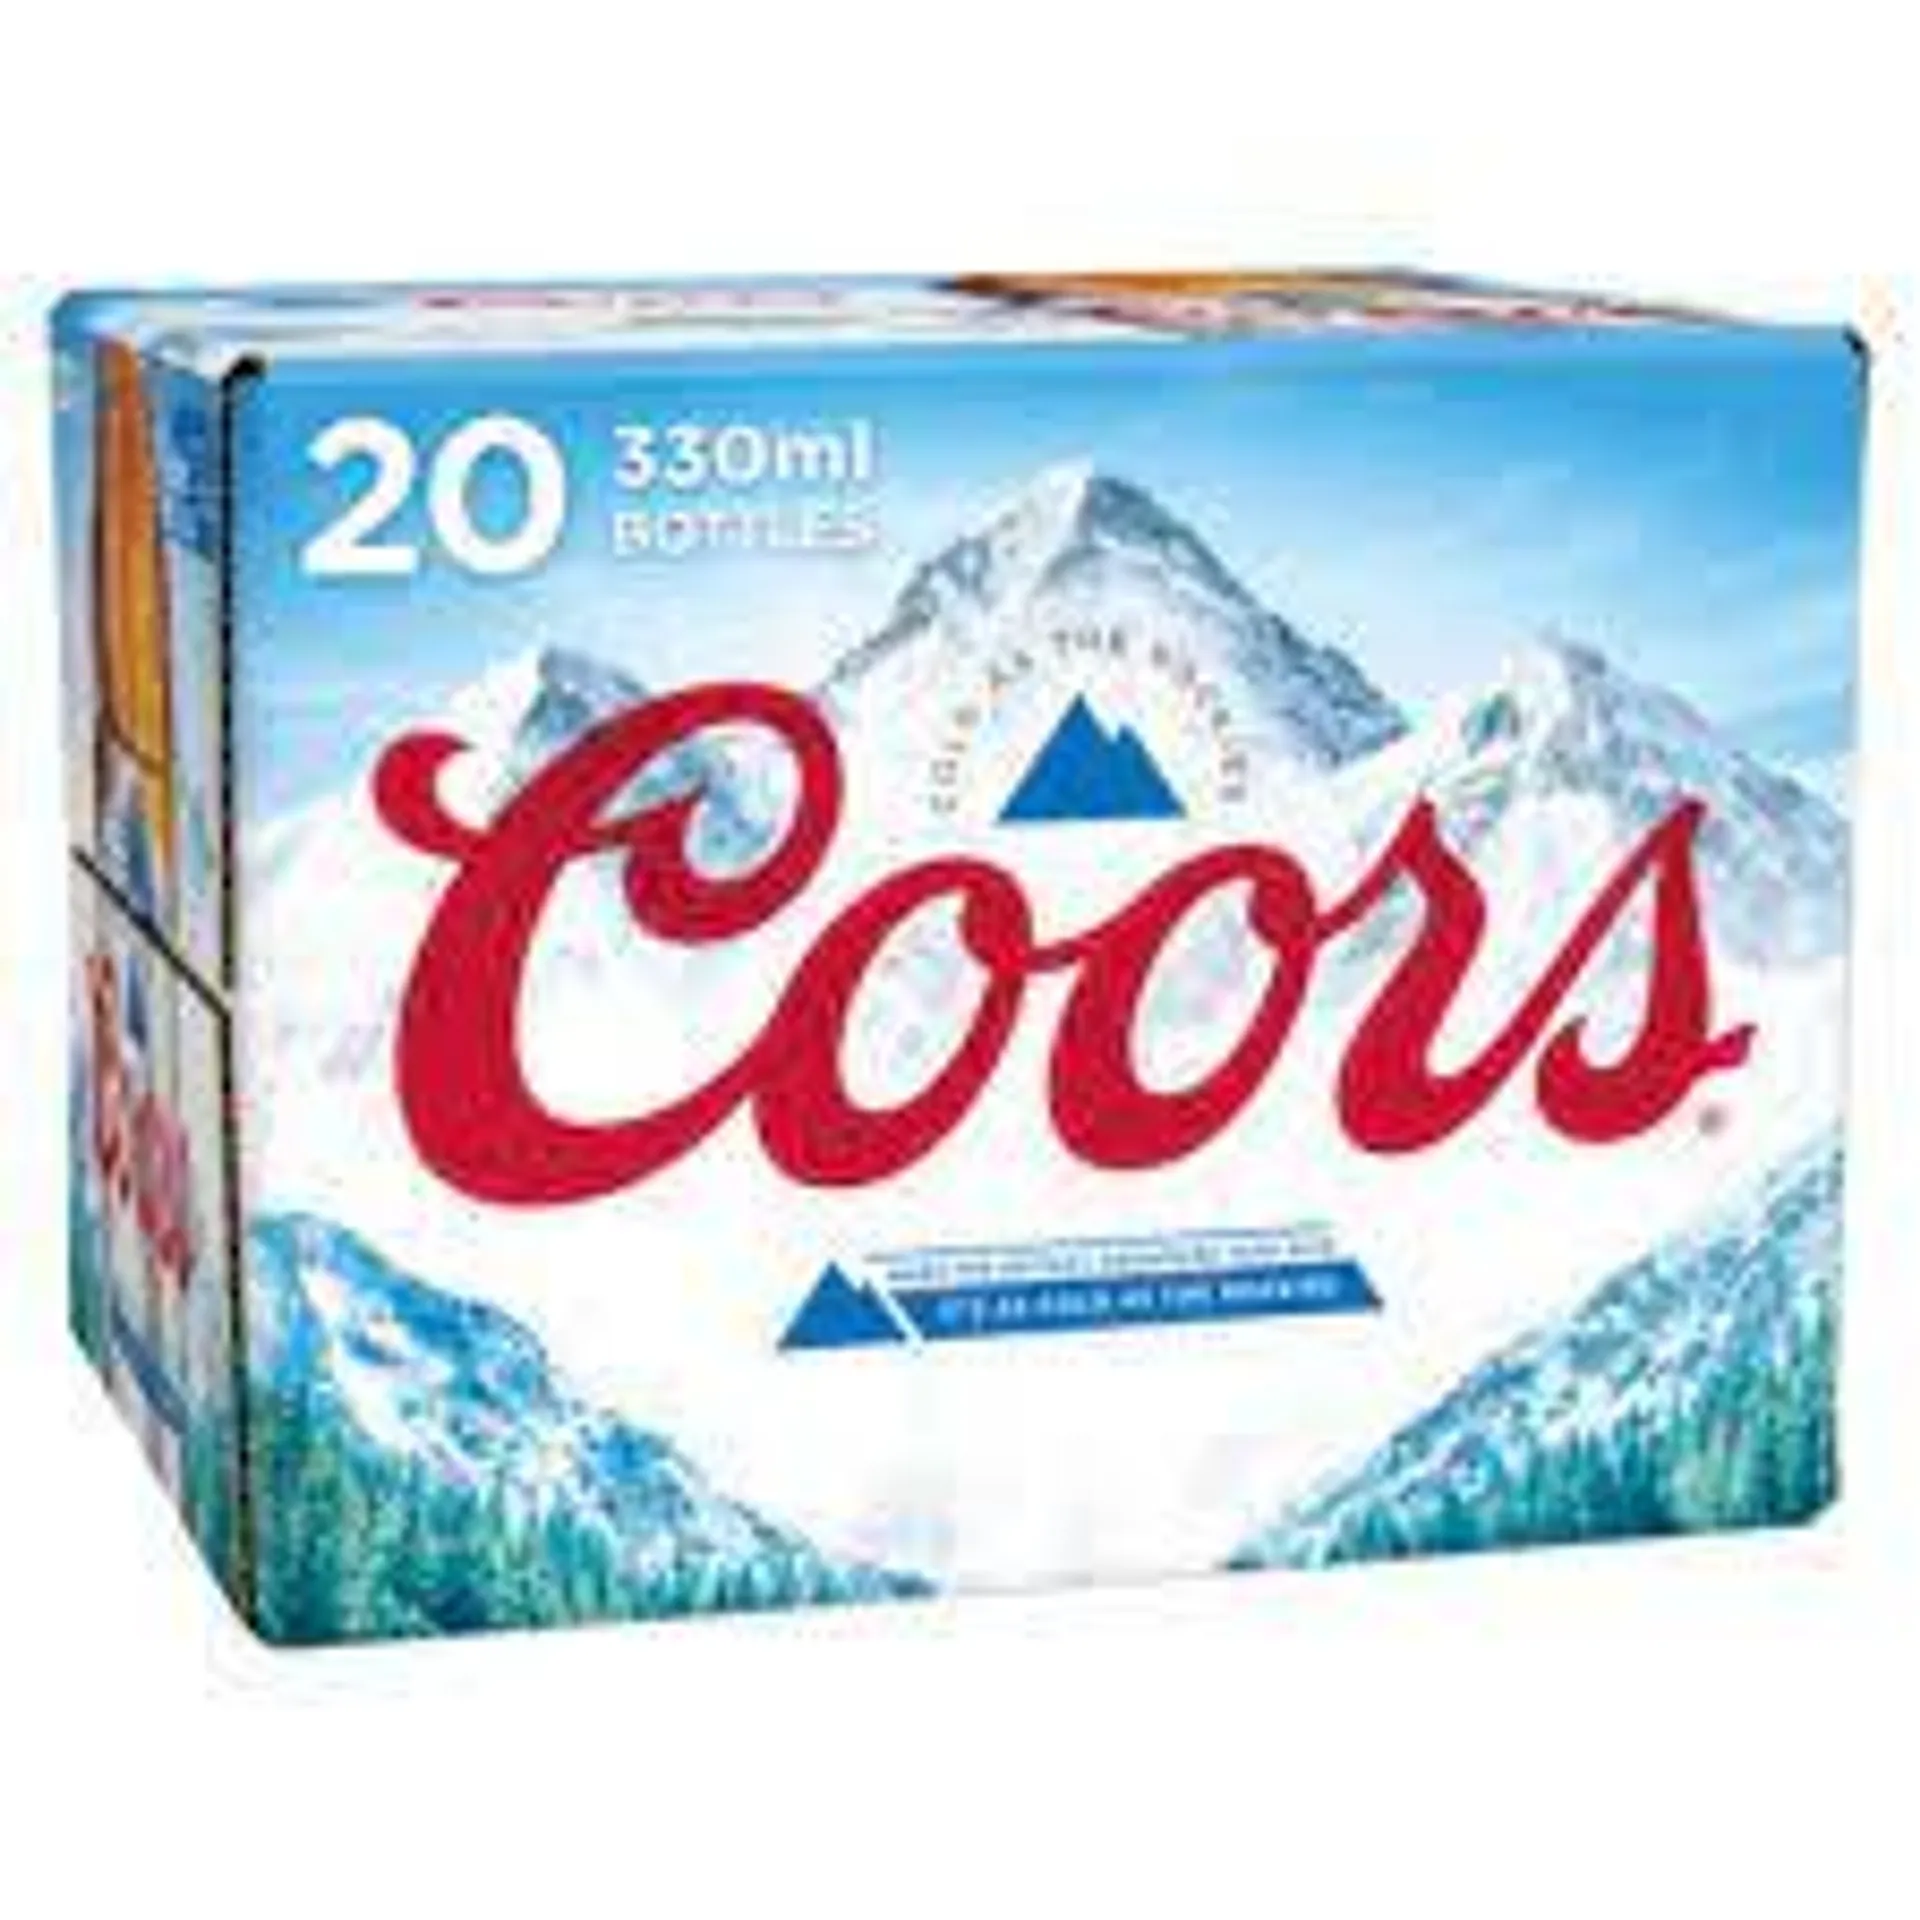 Coors 20 Pack Bottles 4%